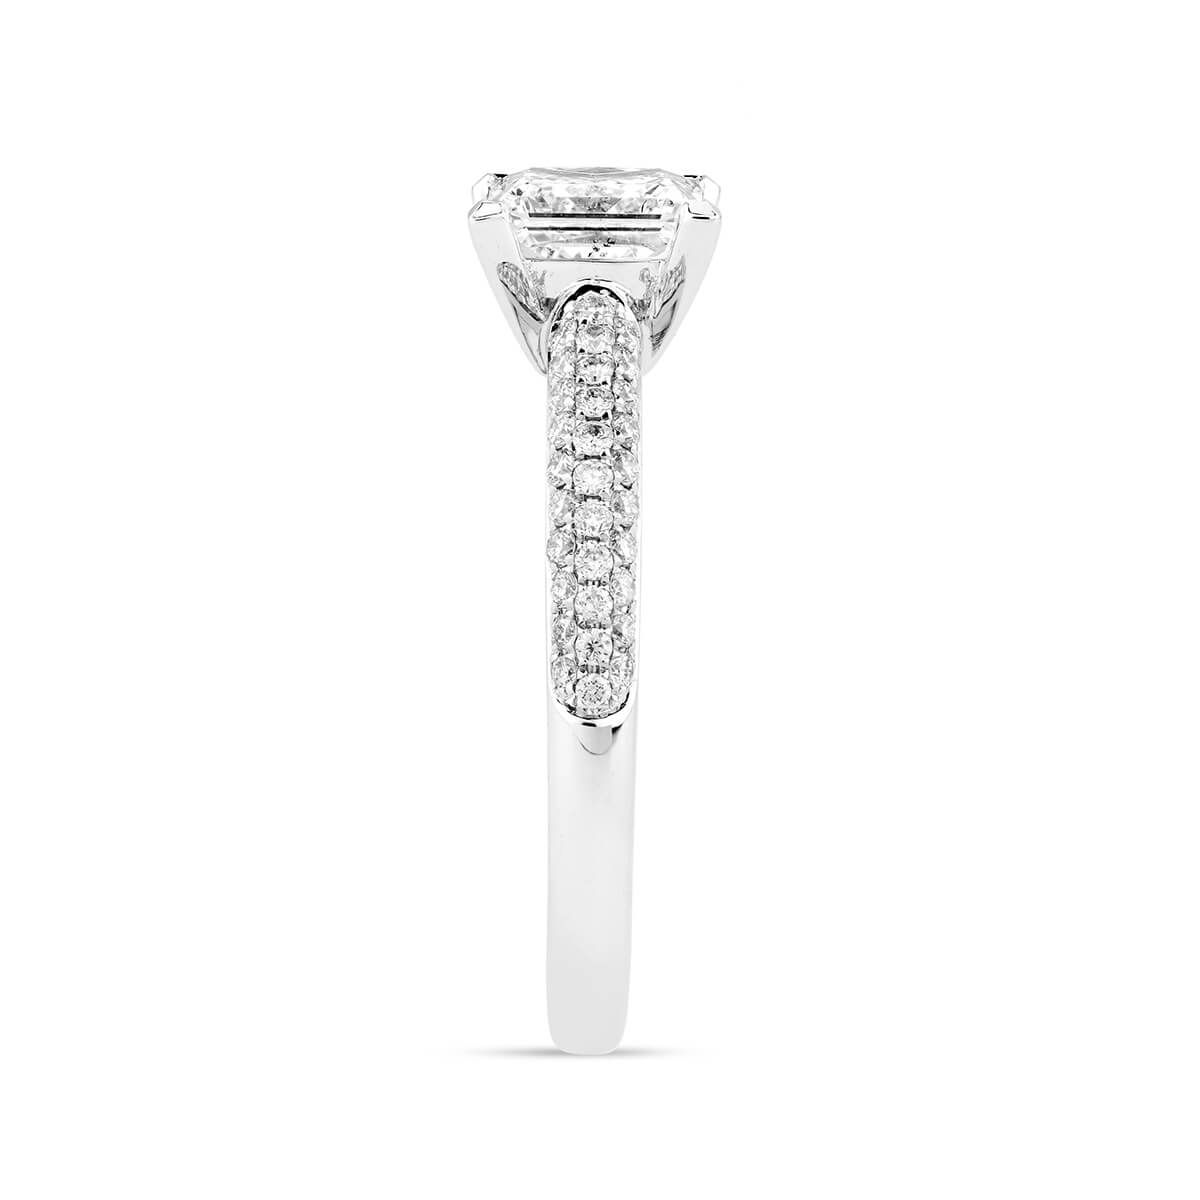  White Diamond Ring, 1.01 Ct. (1.28 Ct. TW), Princess shape, GIA Certified, 5182714629